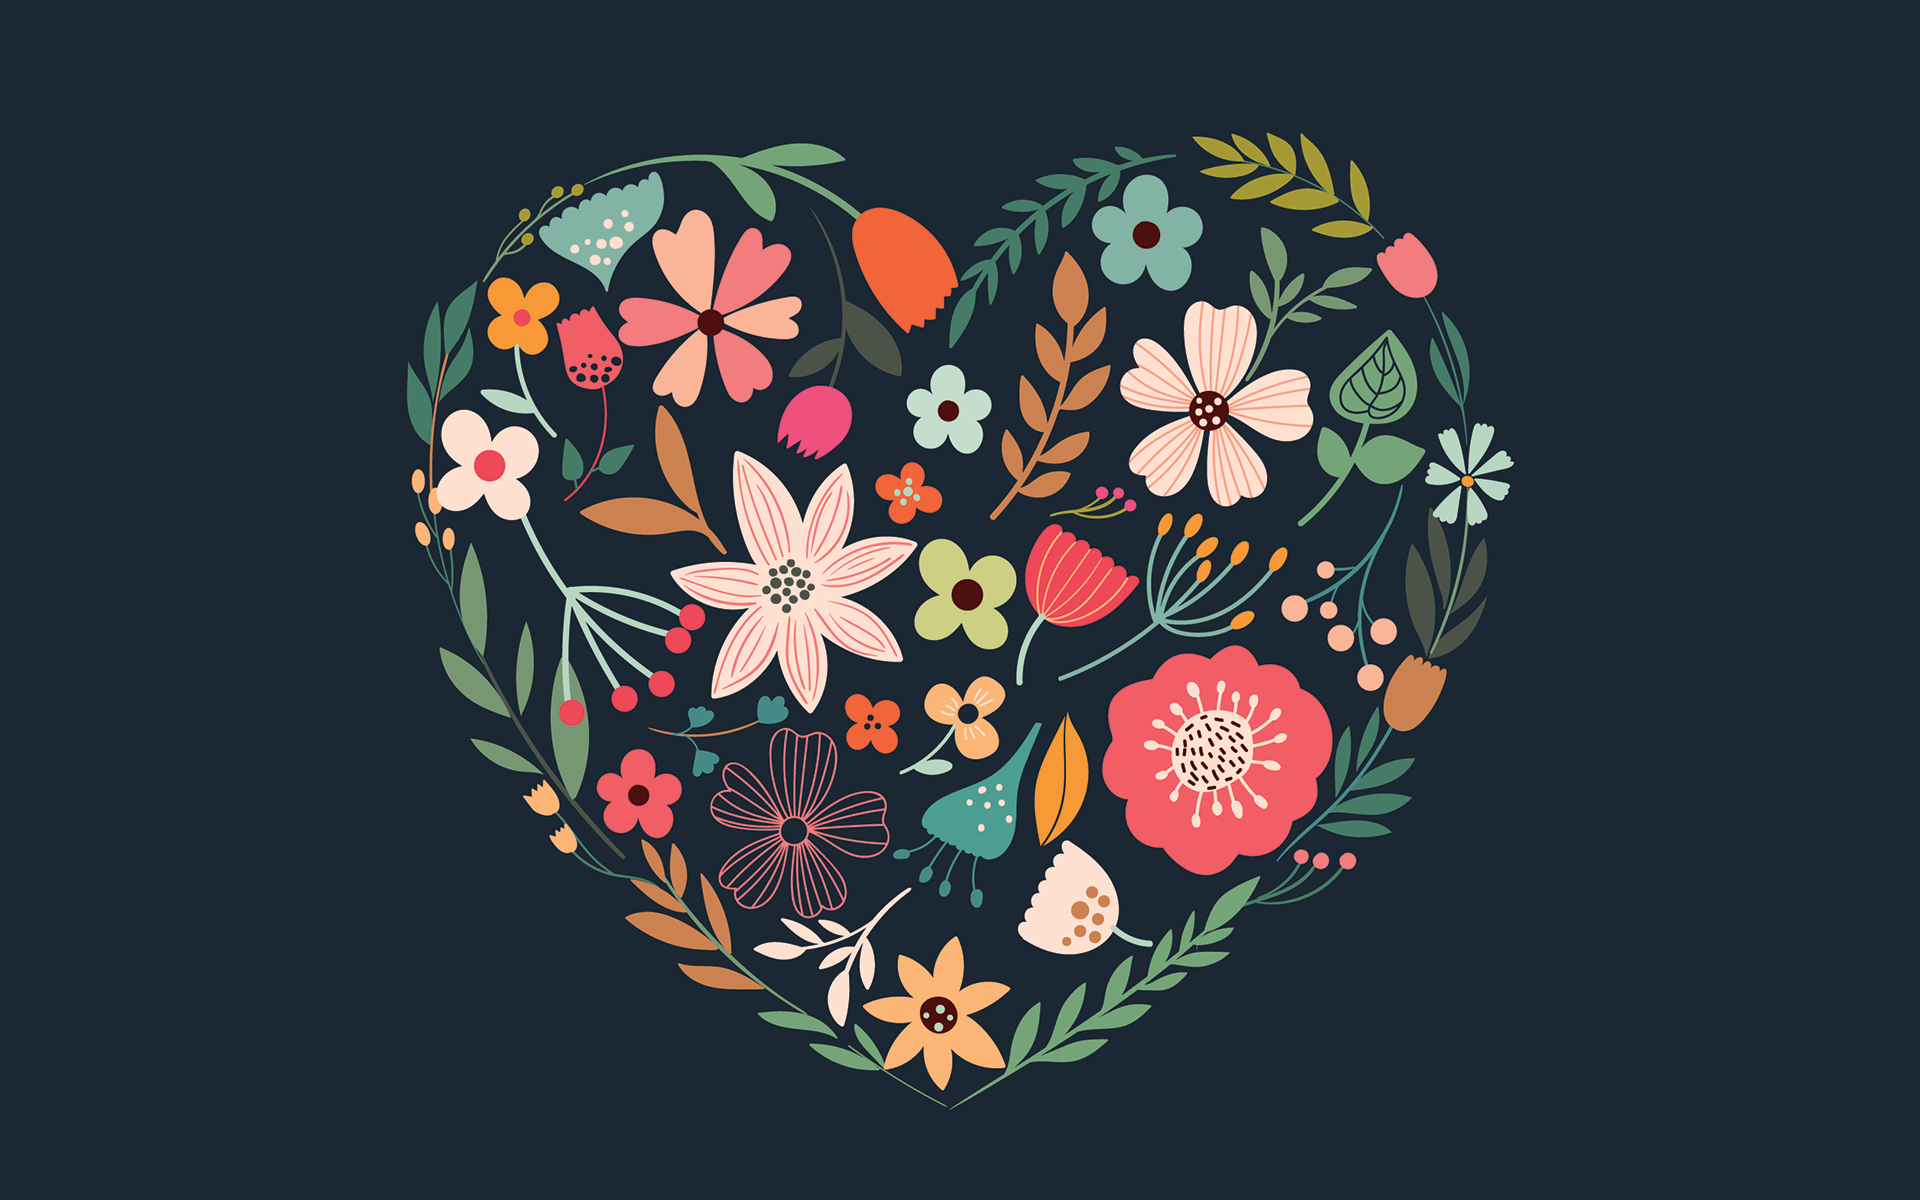 heart illustration. loving kindness with Sharon Salzberg